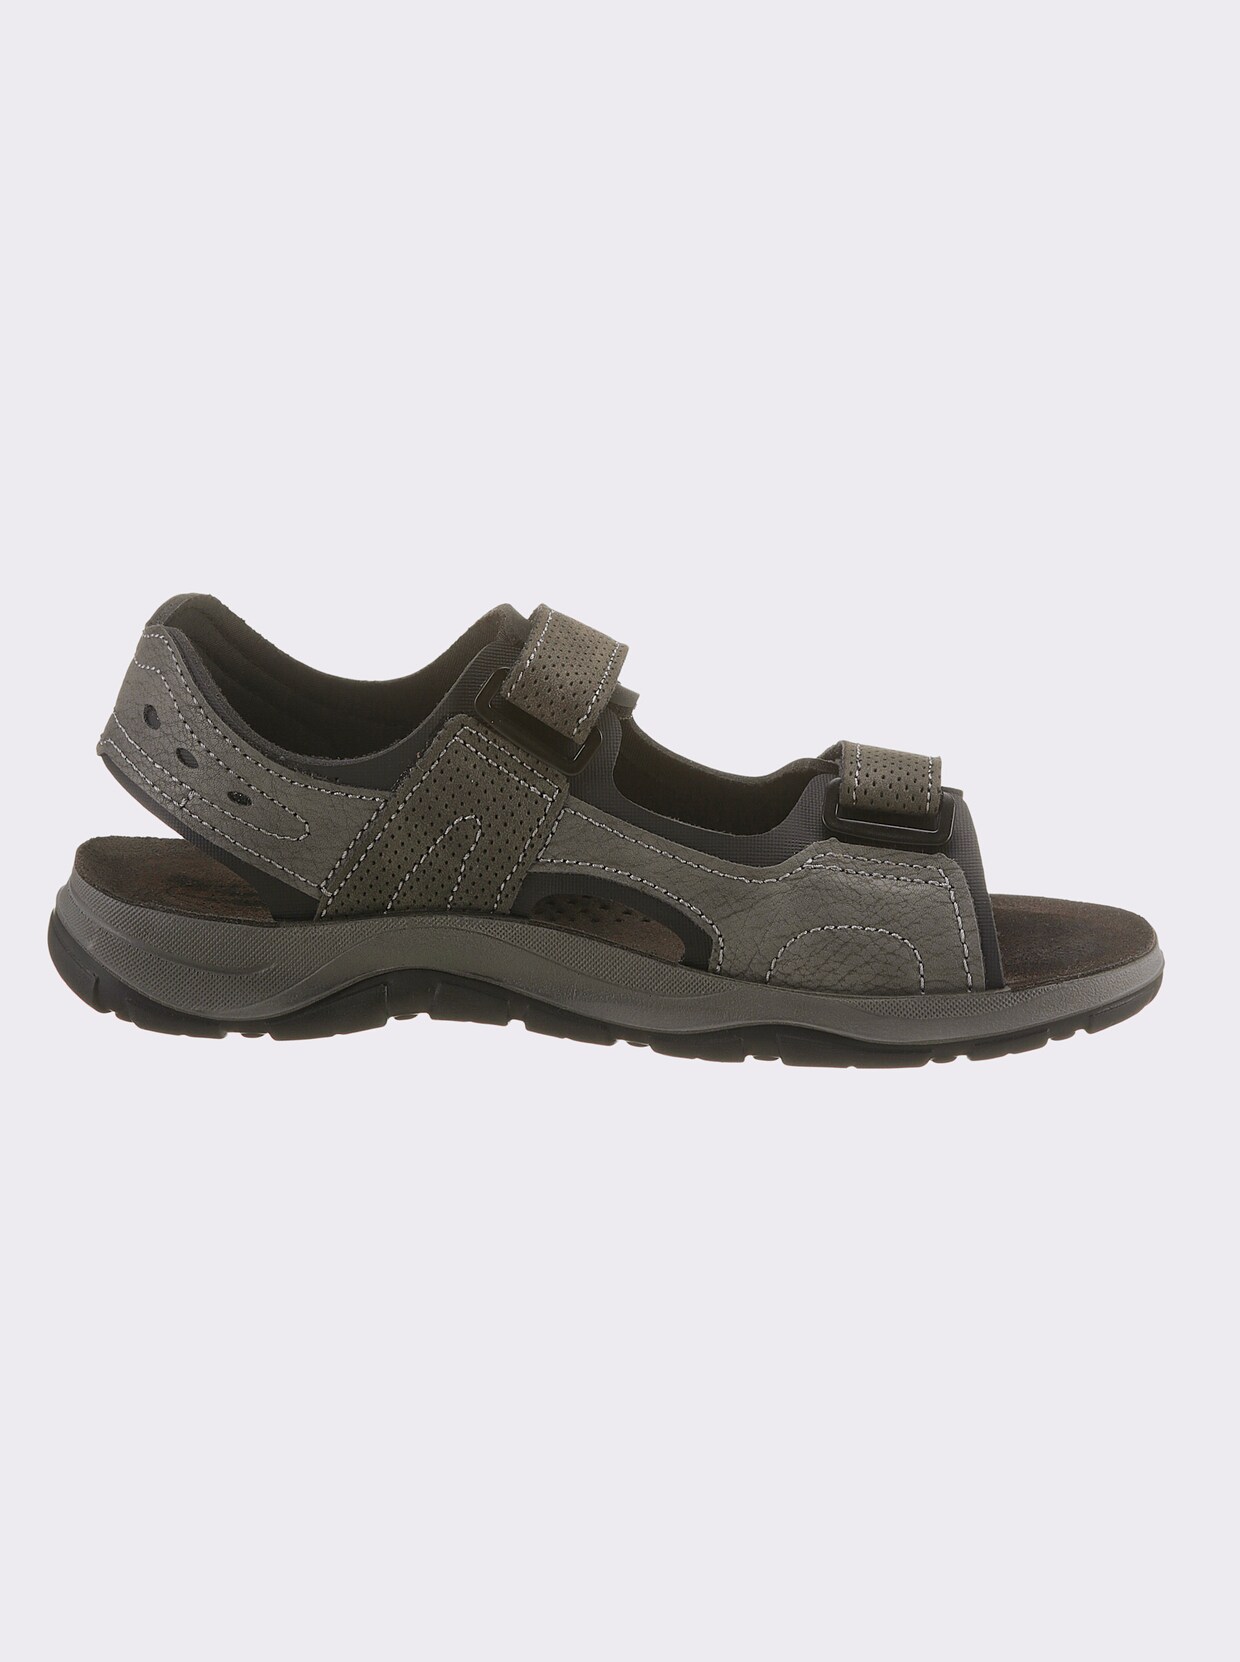 Franken Schuhe Sandale - grau